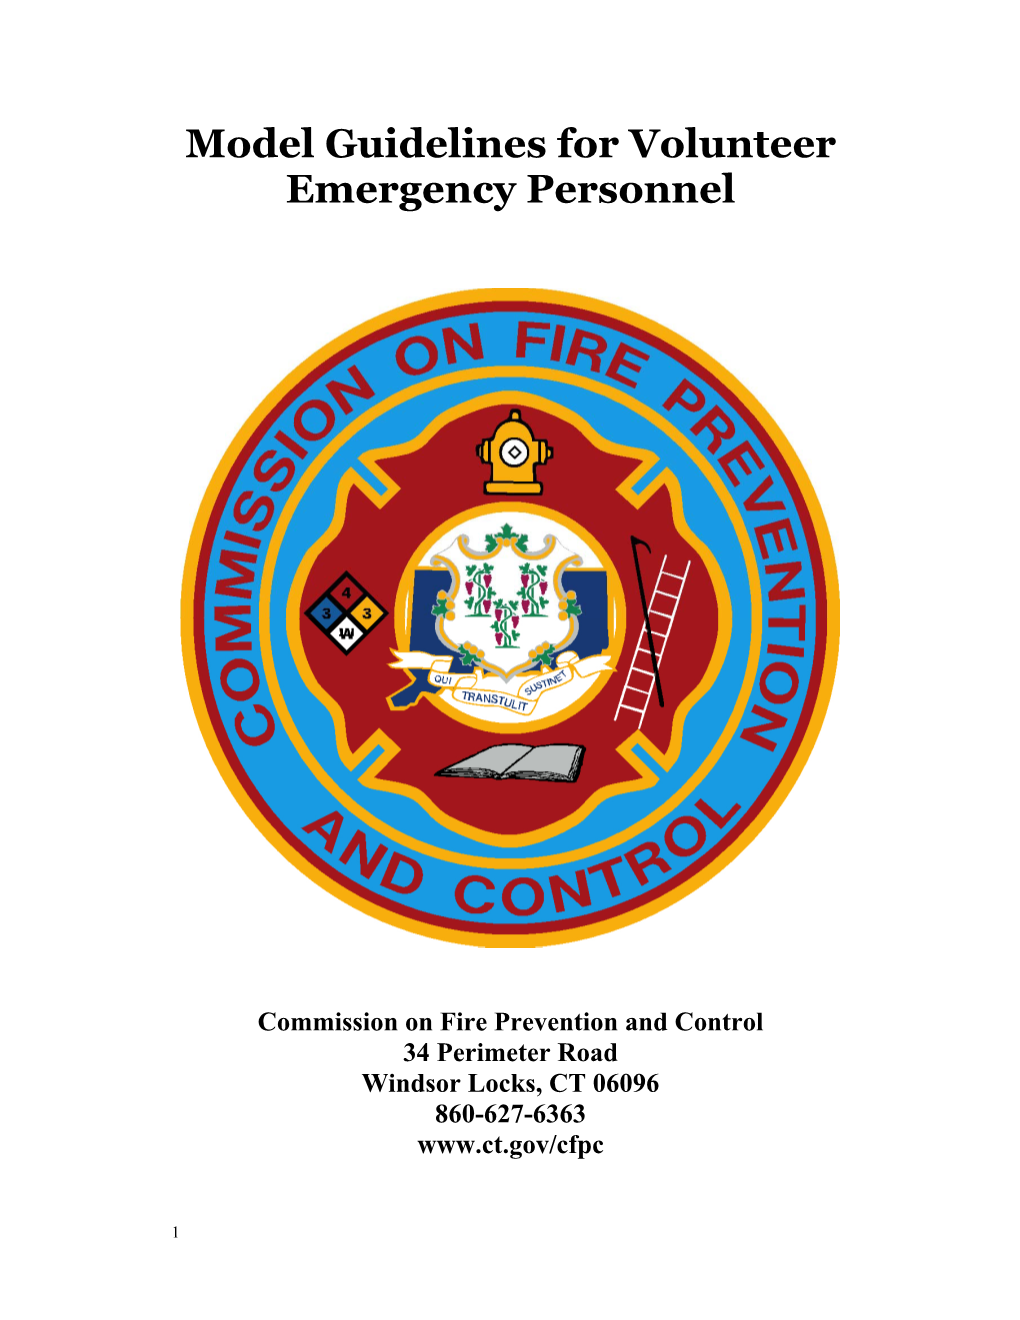 Model Guidelines for Volunteer Emergency Personnel